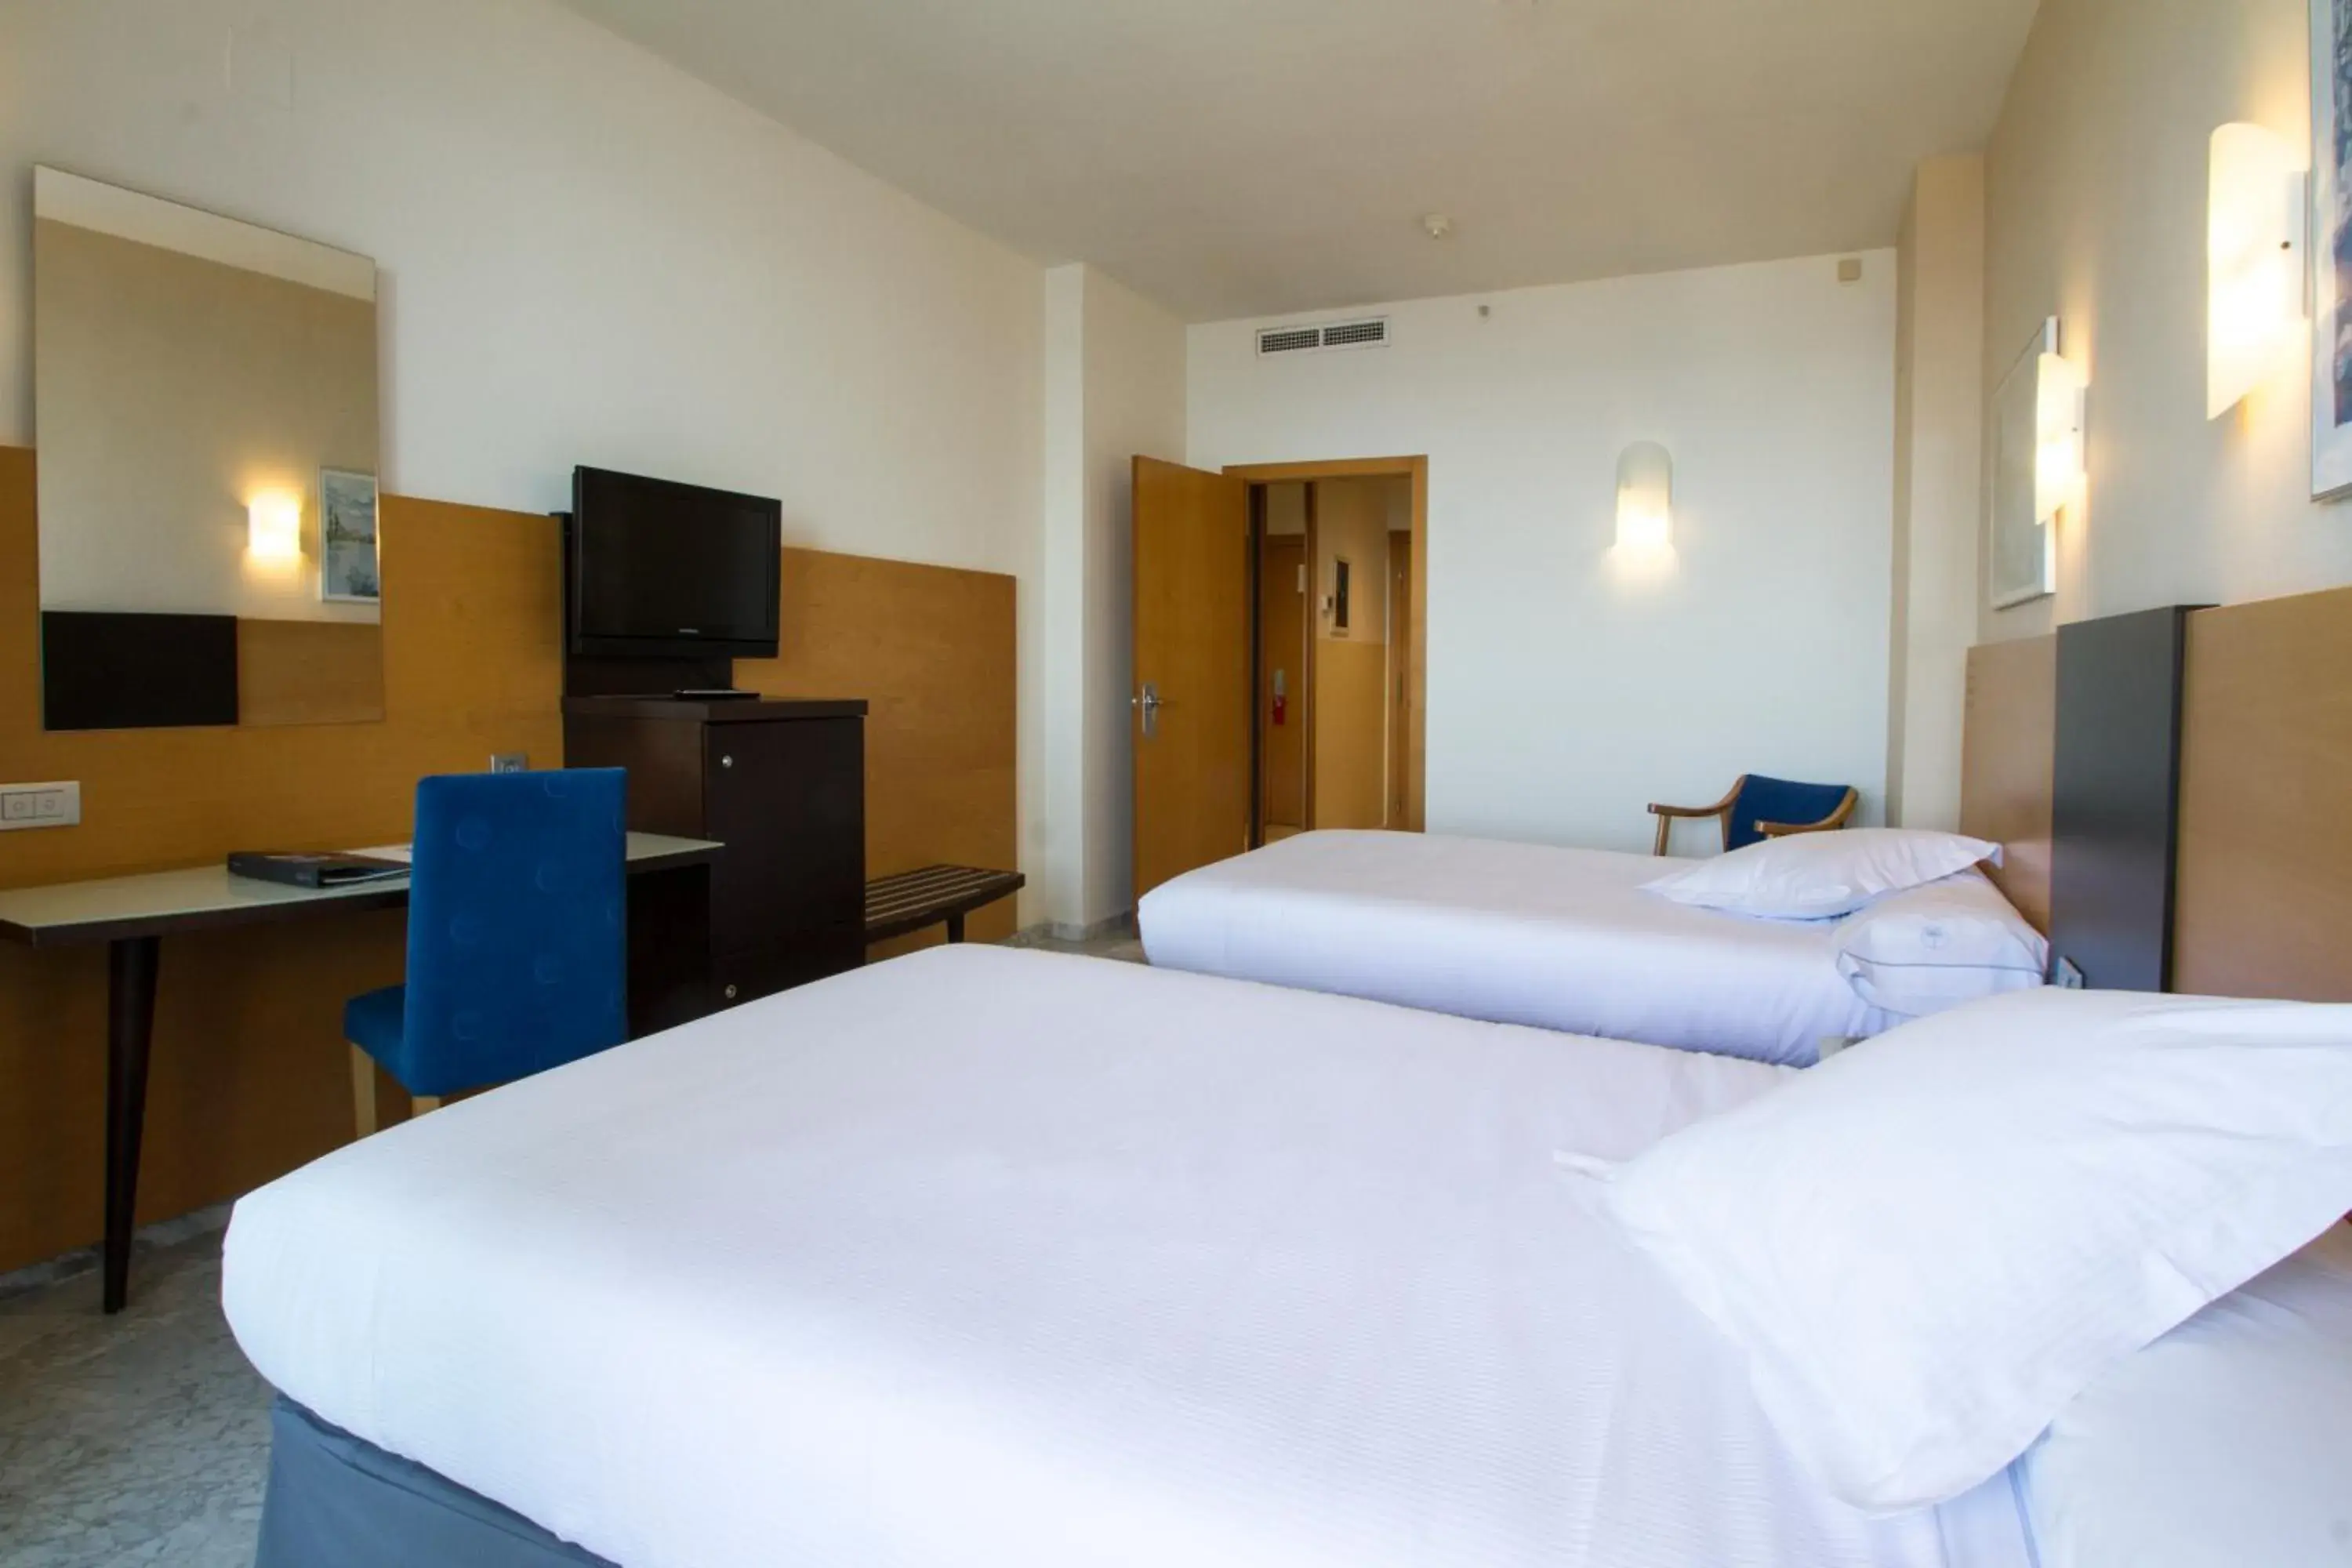 Bedroom, Room Photo in Hotel Madeira Centro